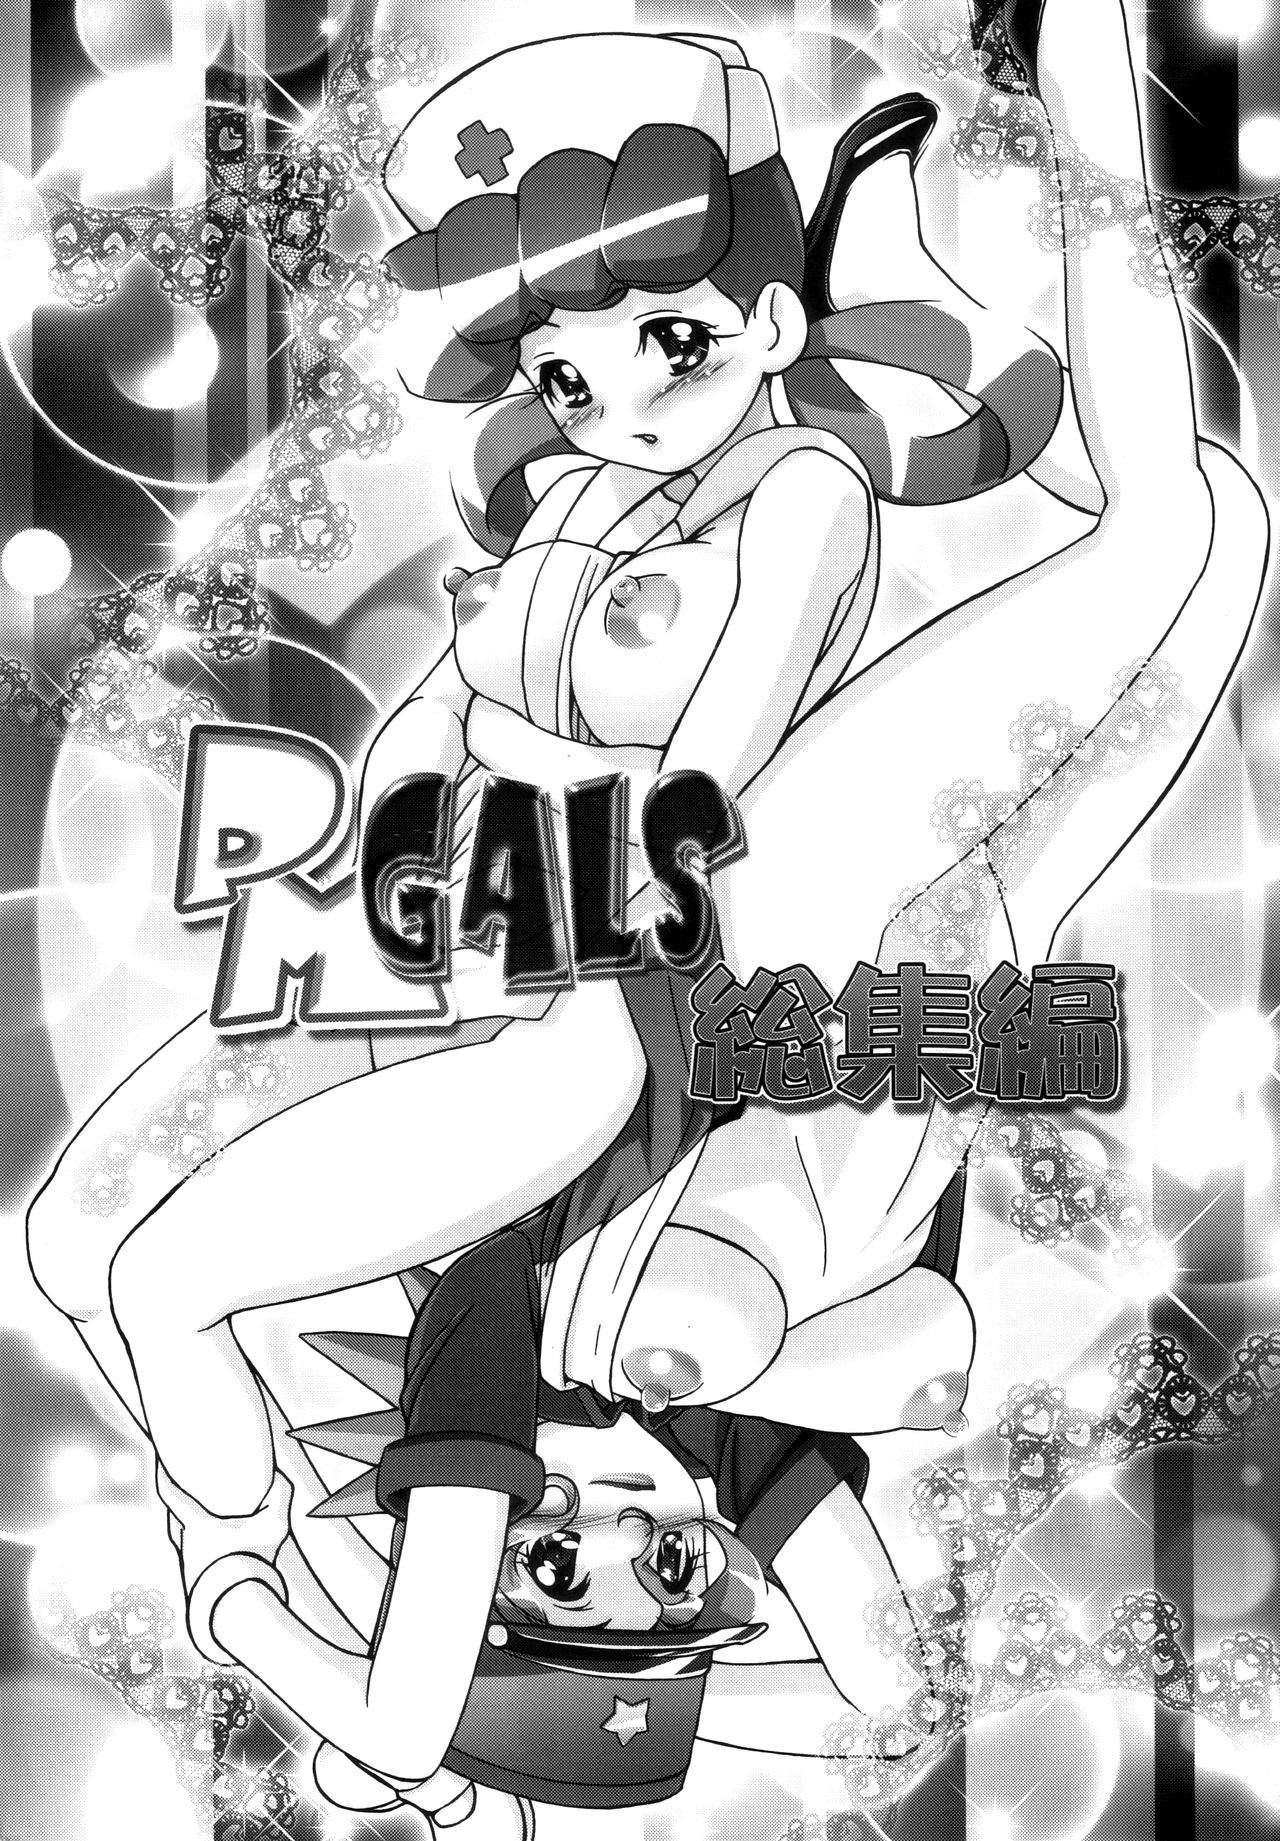 PM GALS Compilation hentai manga picture 2